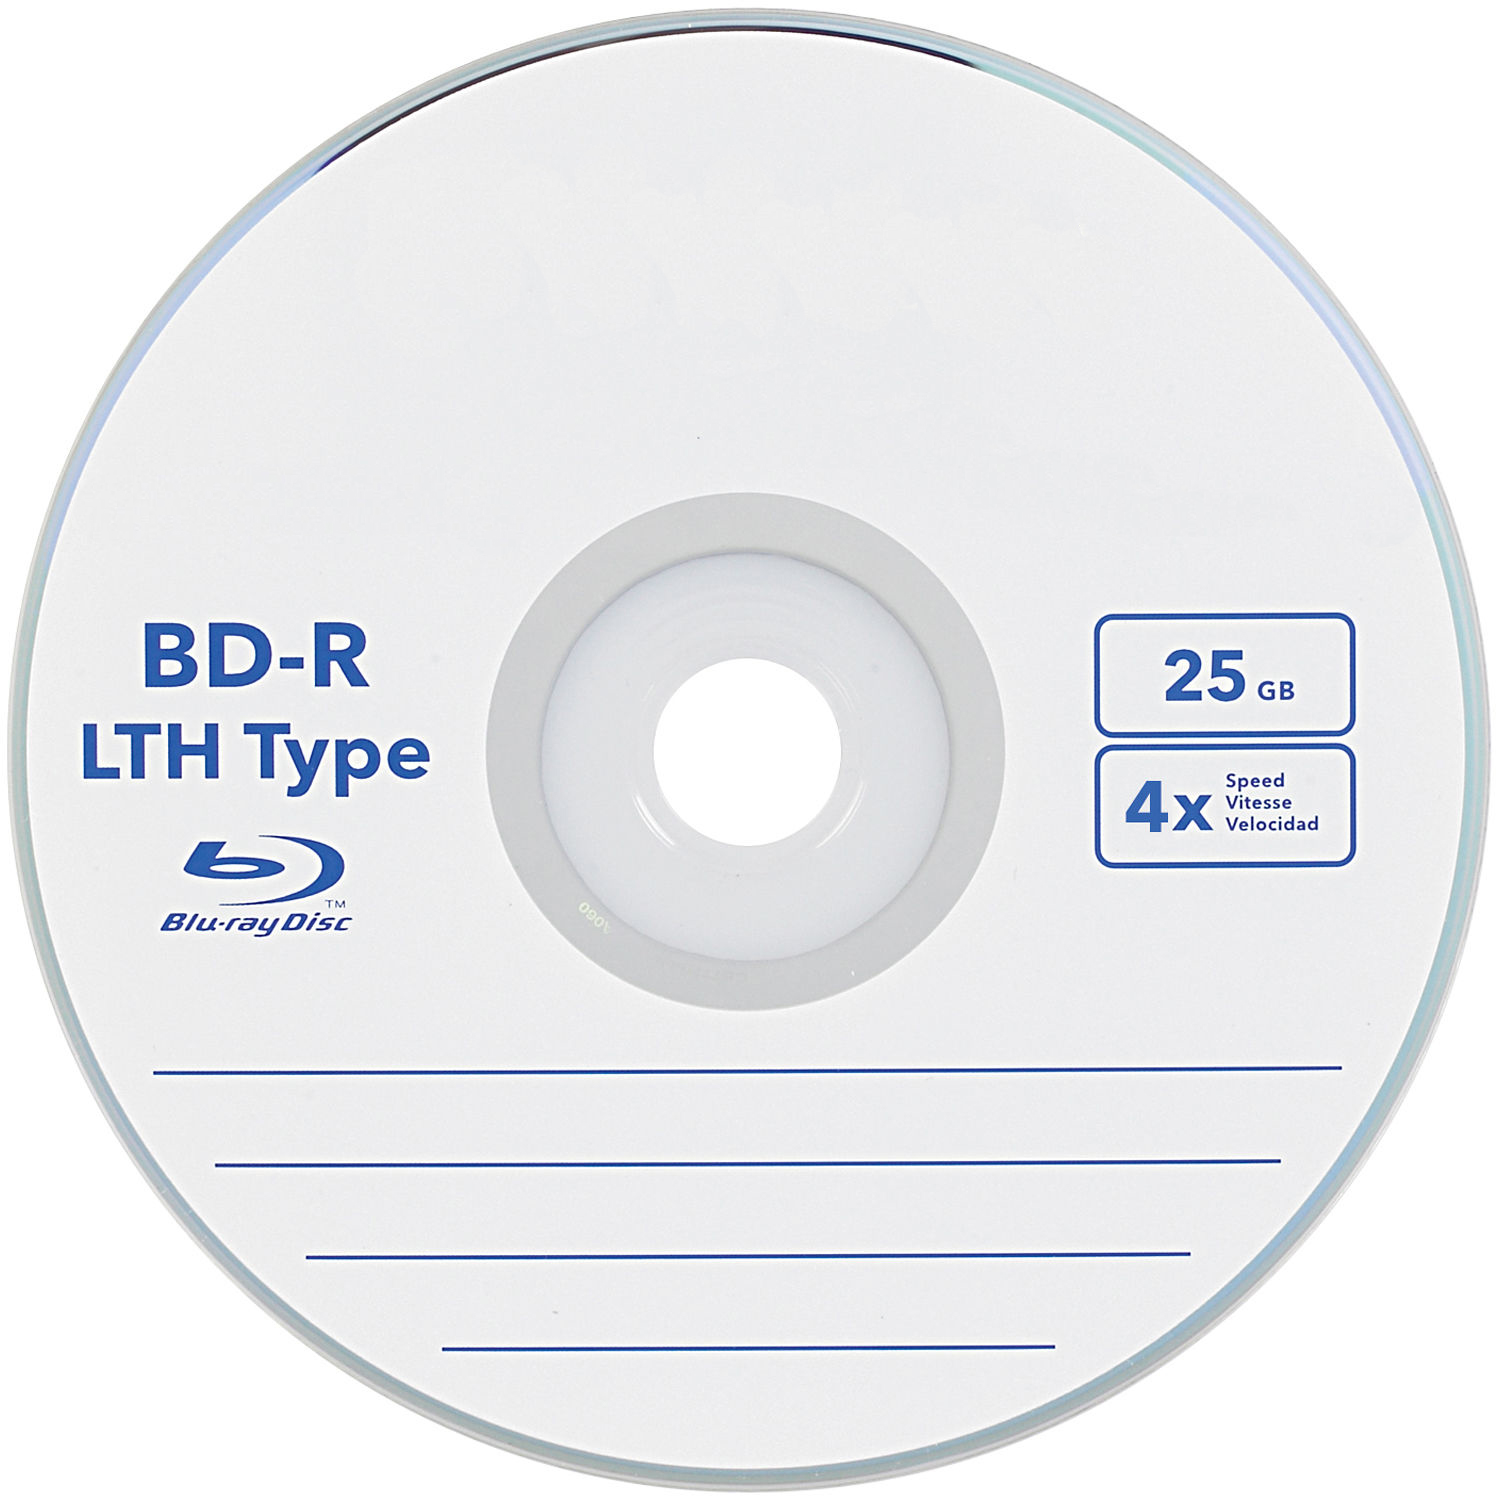 Memory Blu-Ray DVD with 25GB Storage Capacity and 4x Writing Capability